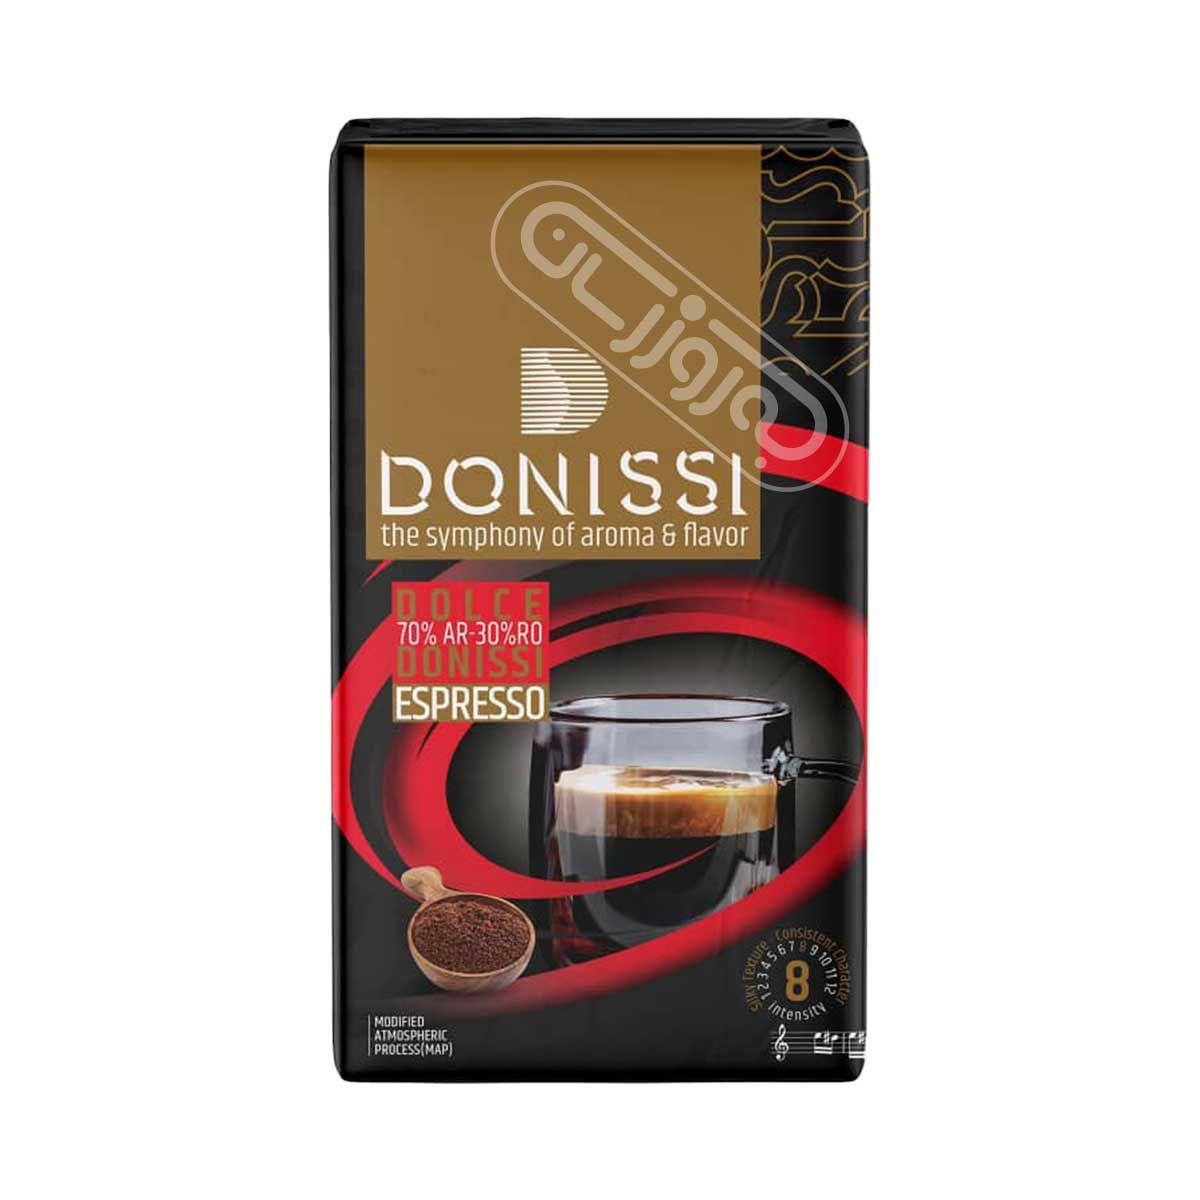 پودر قهوه اسپرسو dolce دونیسی 250 گرمی